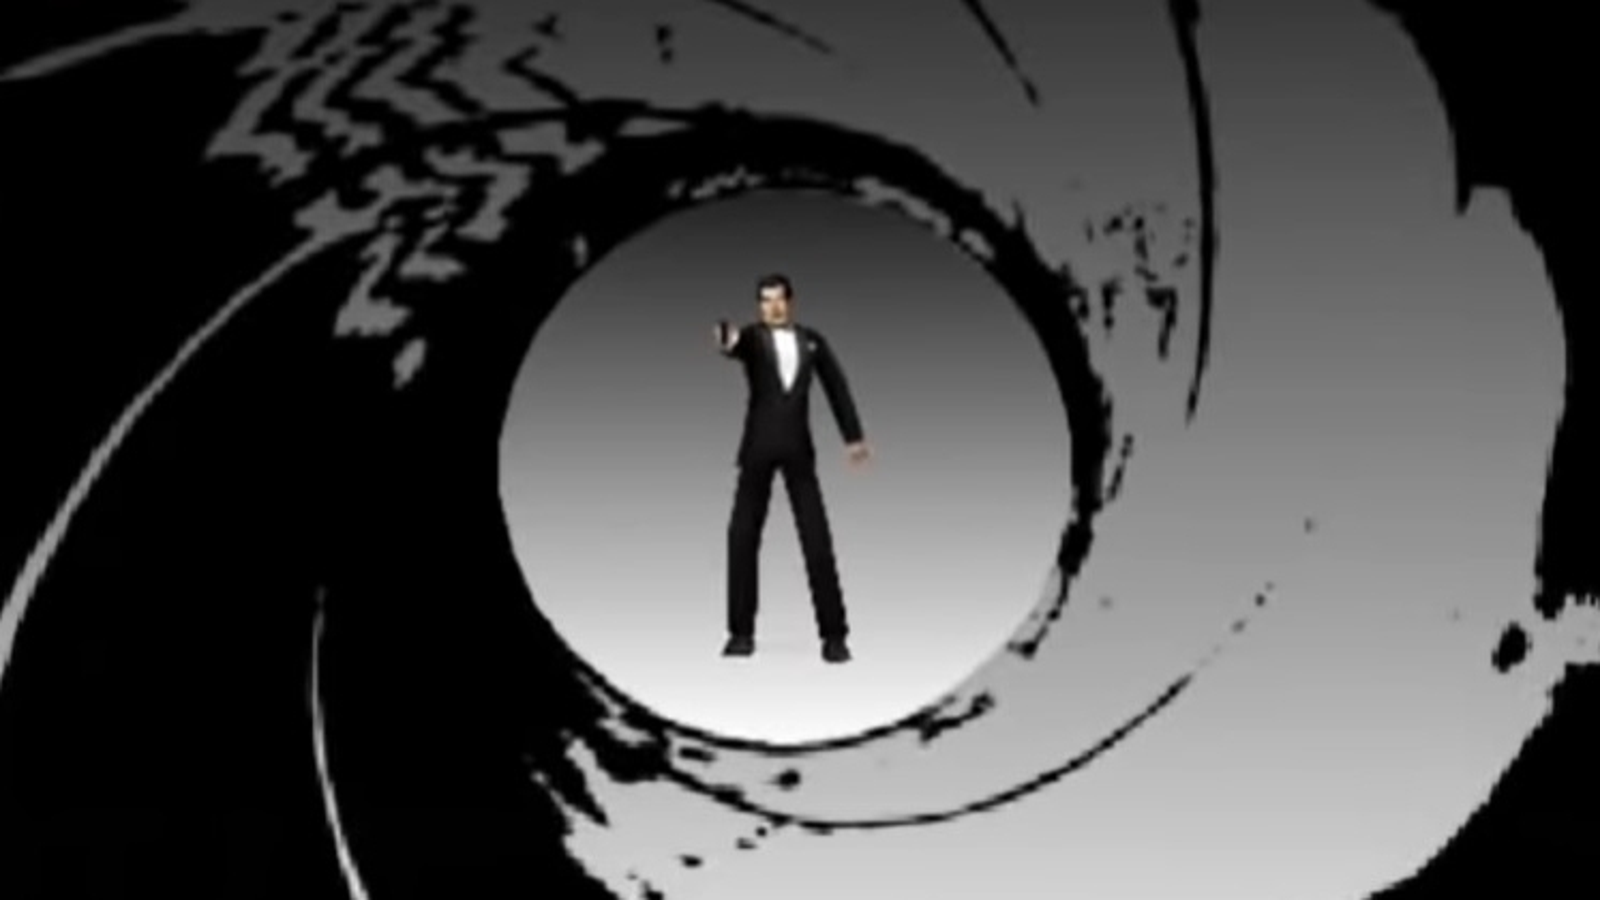 A fan has remade 'Goldeneye 007' in the 'Far Cry 5' level editor